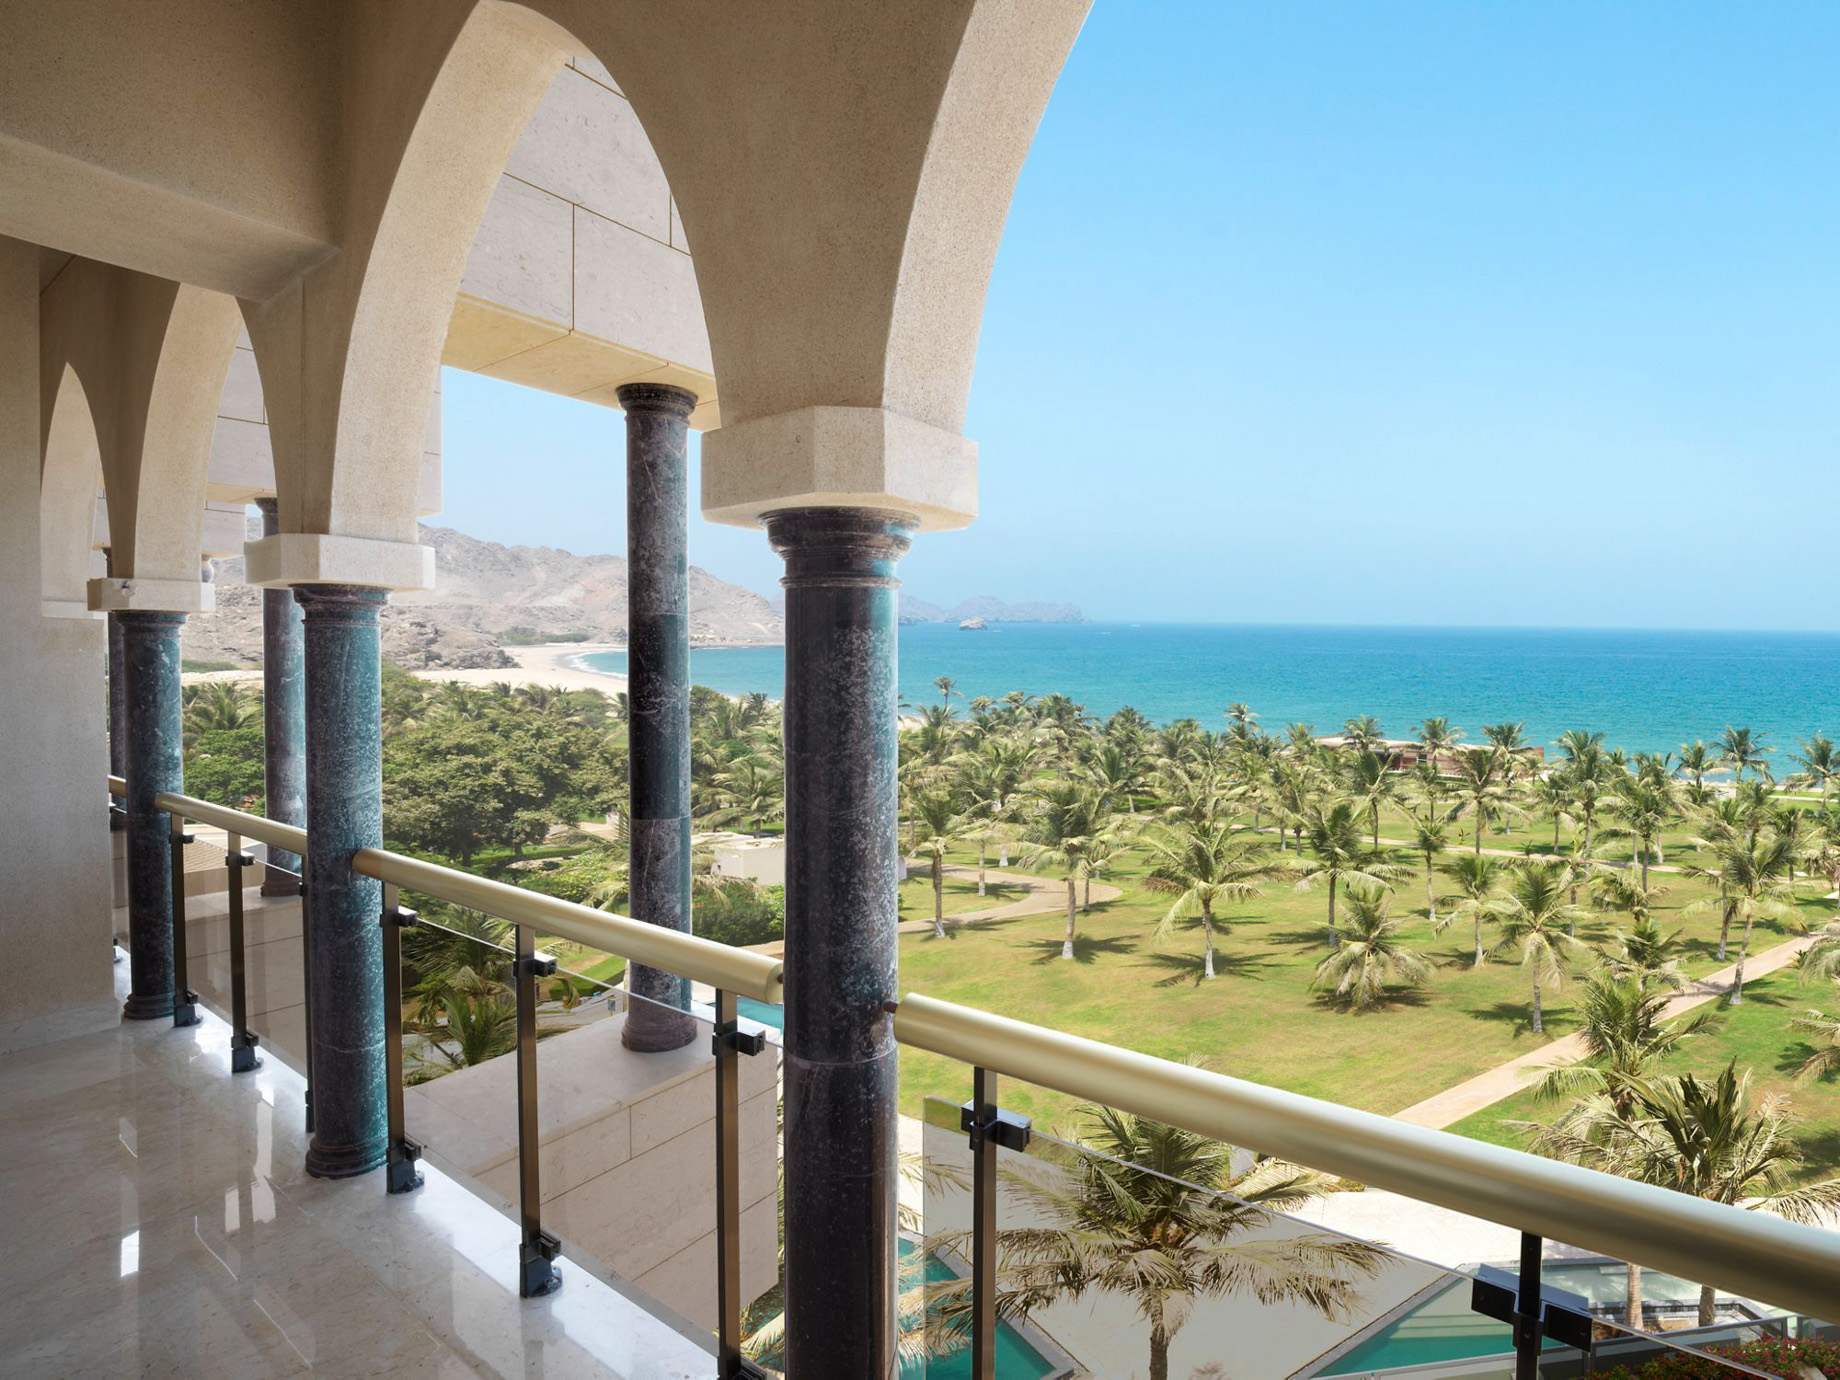 Al Bustan Palace, A Ritz-Carlton Hotel – Muscat, Oman – Executive Suite Balcony